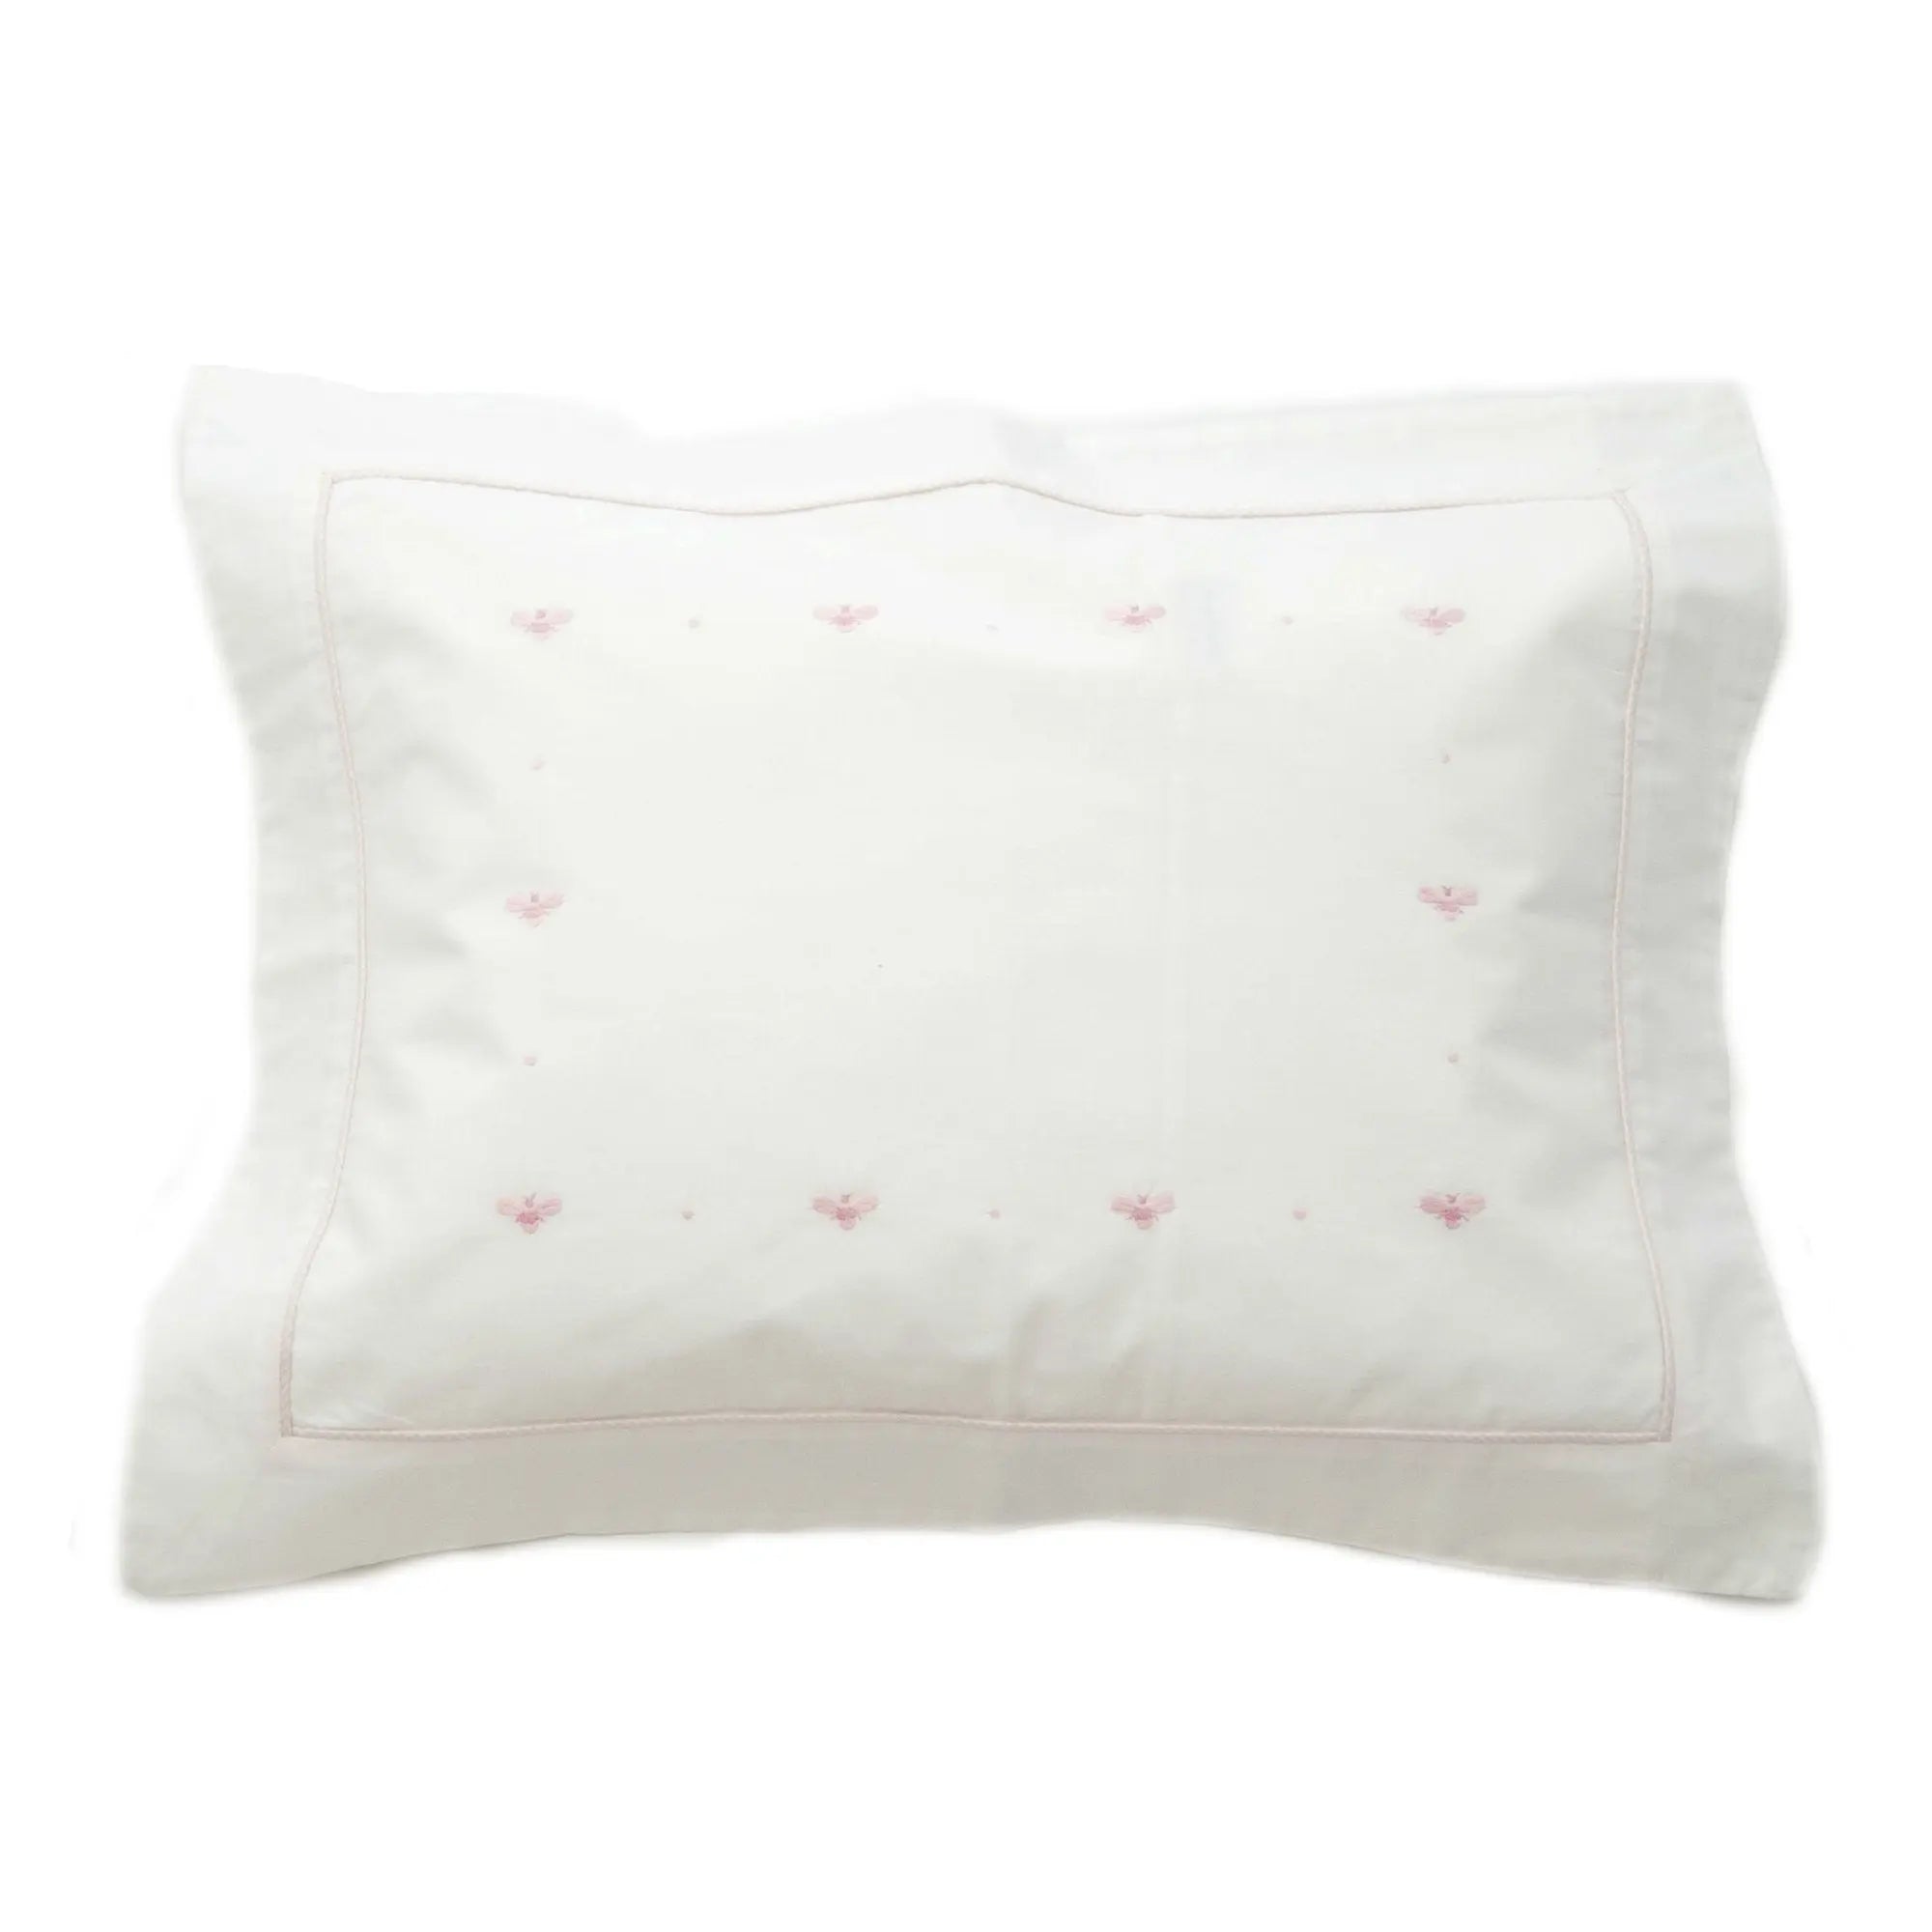 Boudoir pillowcase "baby bees" pink-Towels & bedlinen-Gordonsbury-Blue Almonds-London-South Kensington